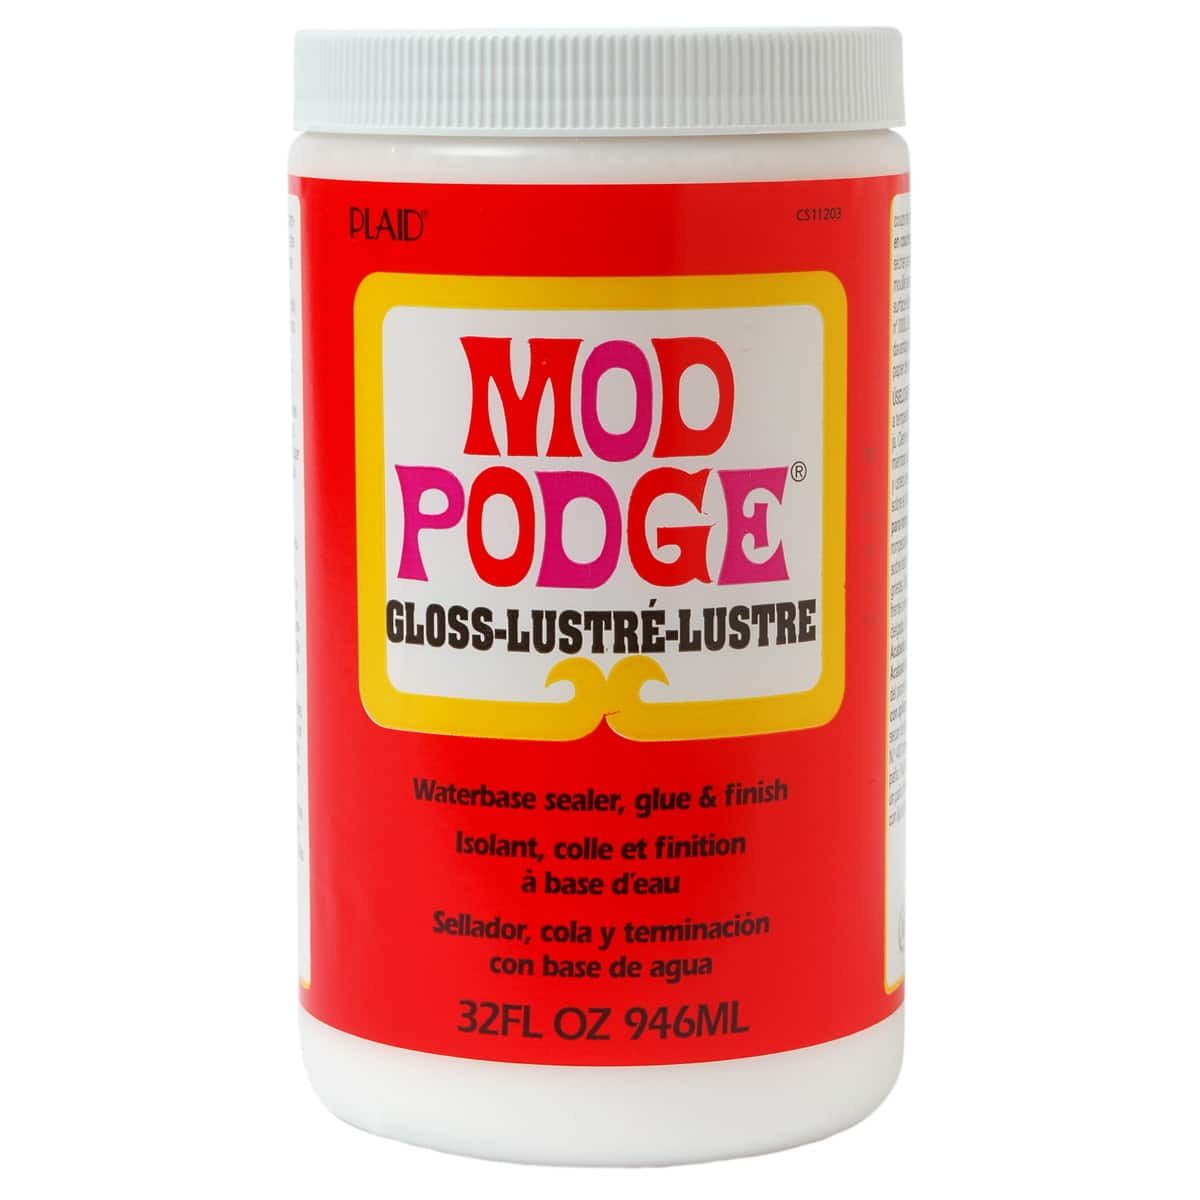 Mod Podge Dishwasher Safe Gloss Sealer, Glue and Finish, Clear, 8